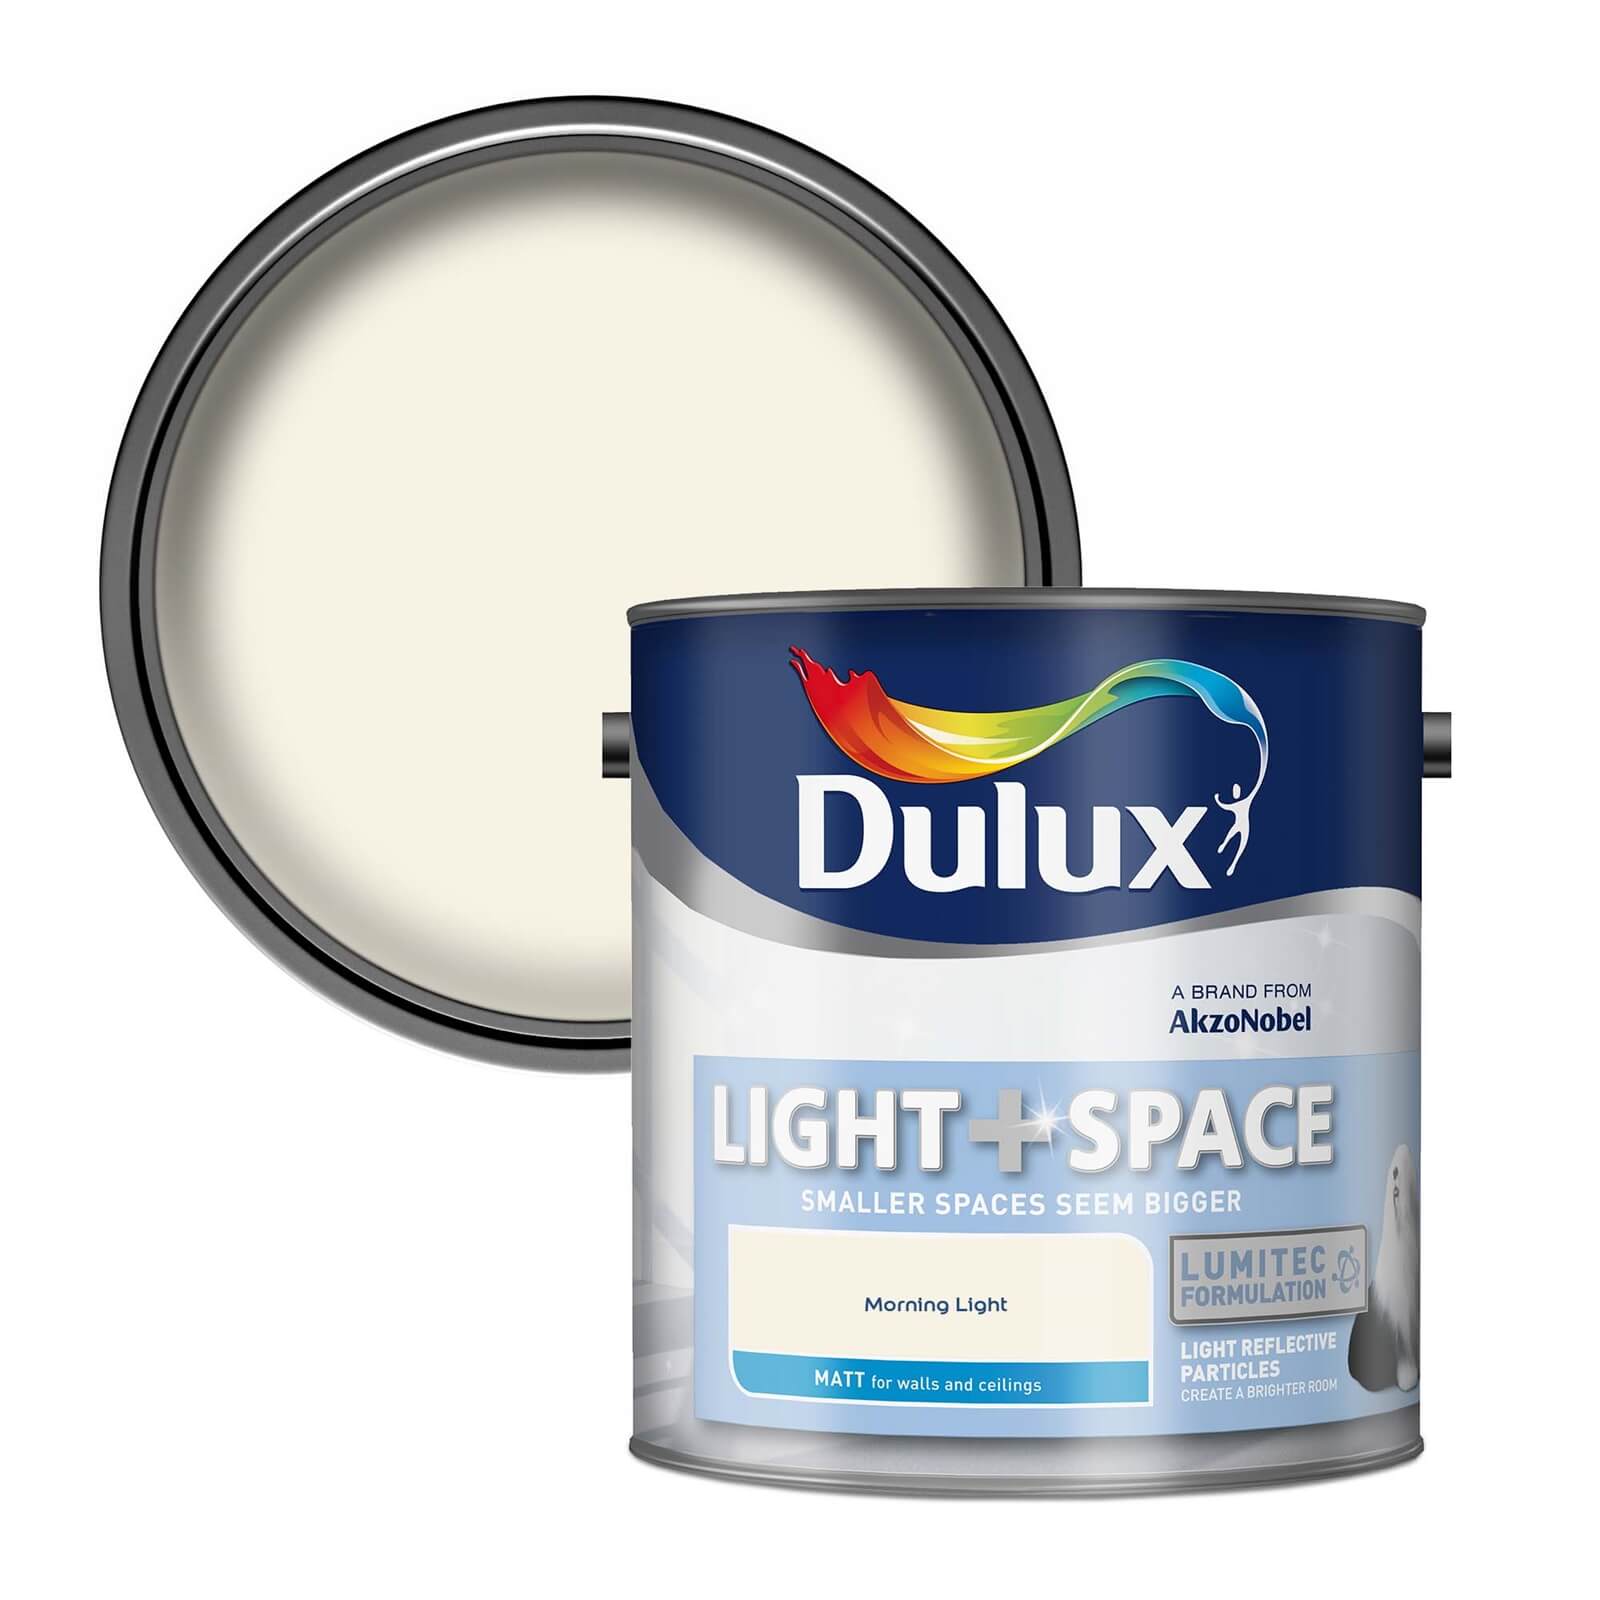 Photo of Dulux Light & Space Morning Light Matt Emulsion Paint - 2.5l